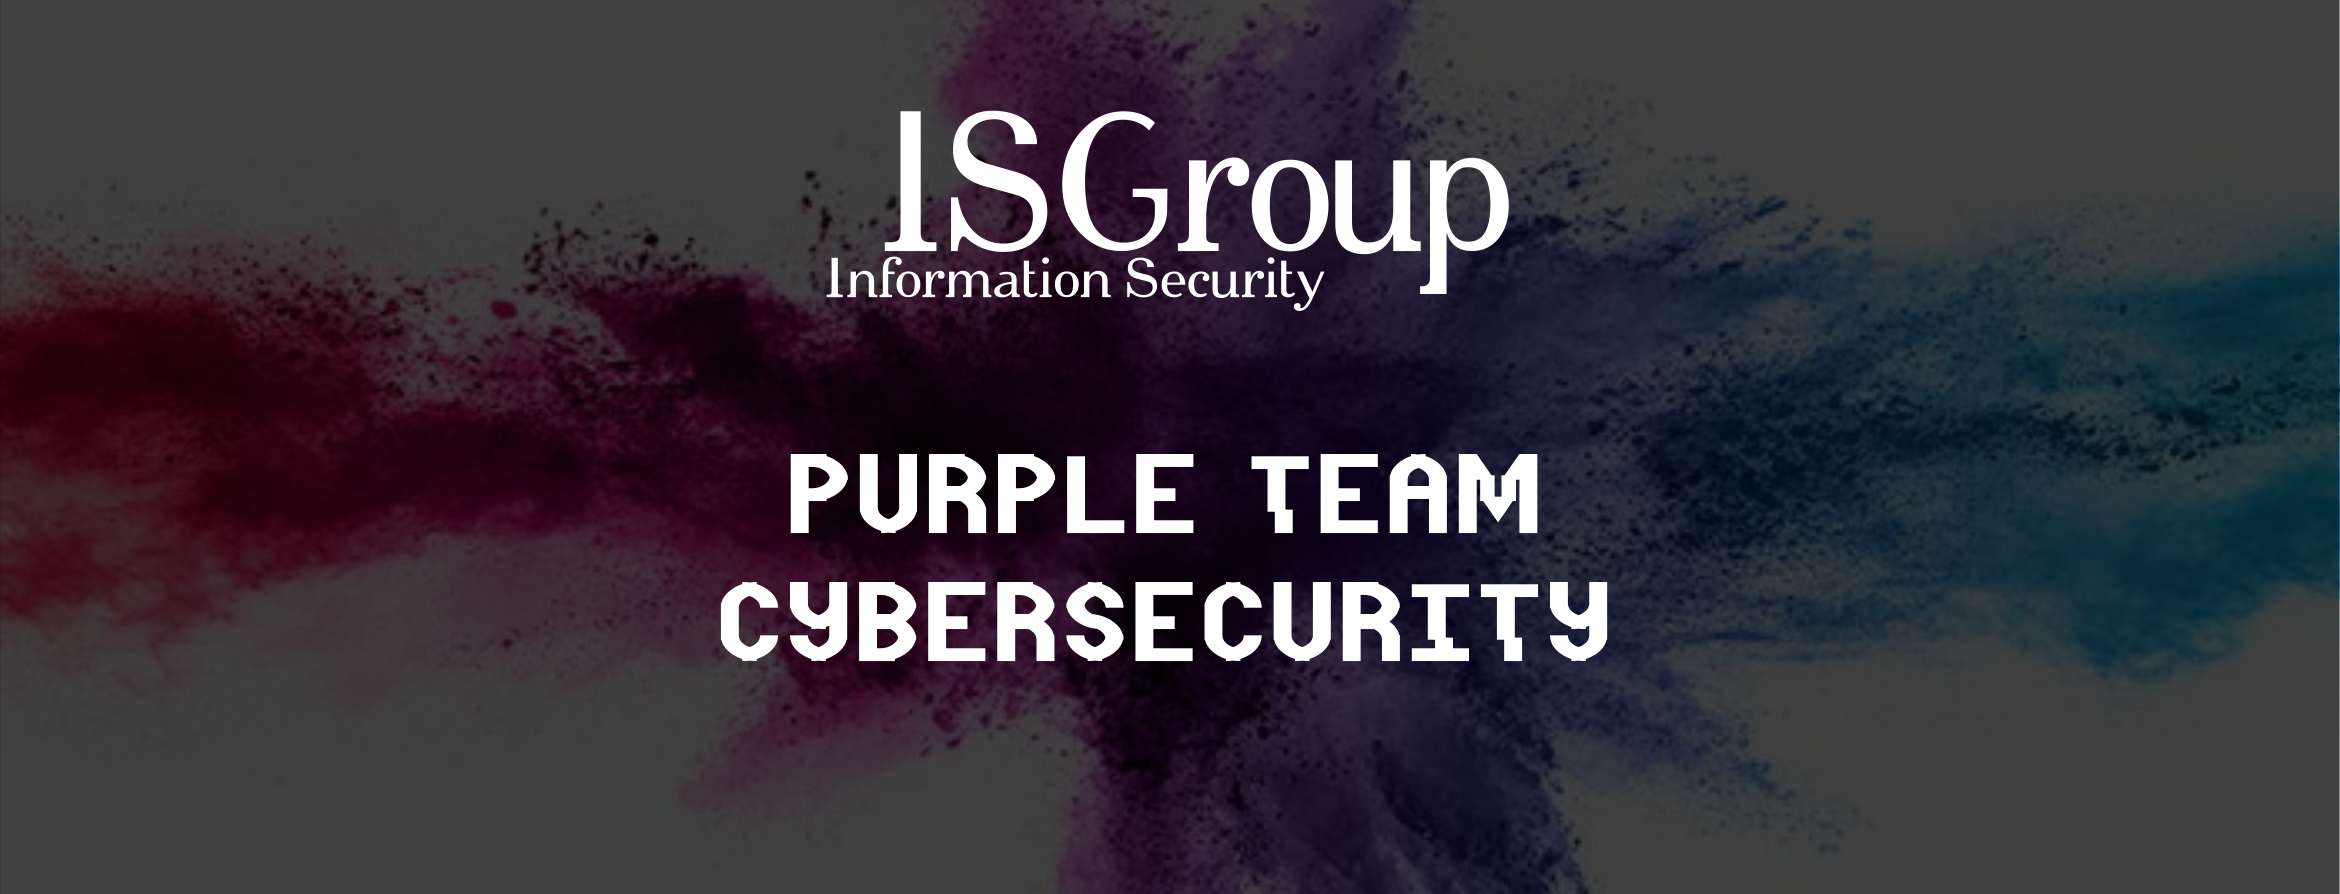 Purple Team Cybersecurity